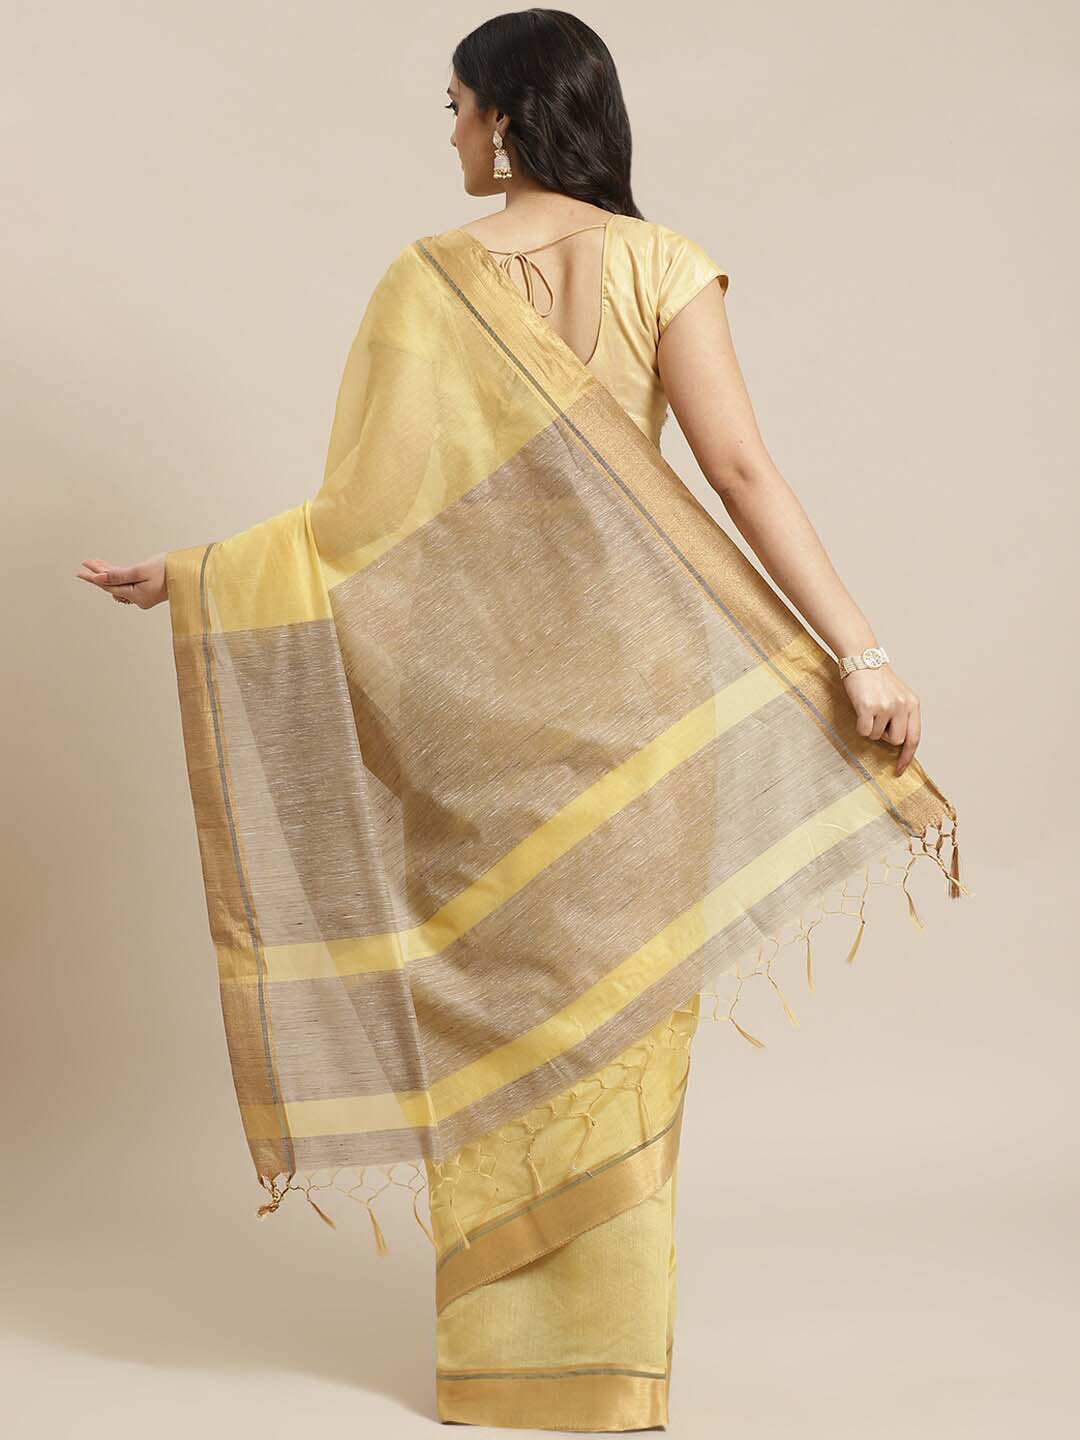 Indethnic Banarasi Yellow Solid Work Wear Saree - View 1